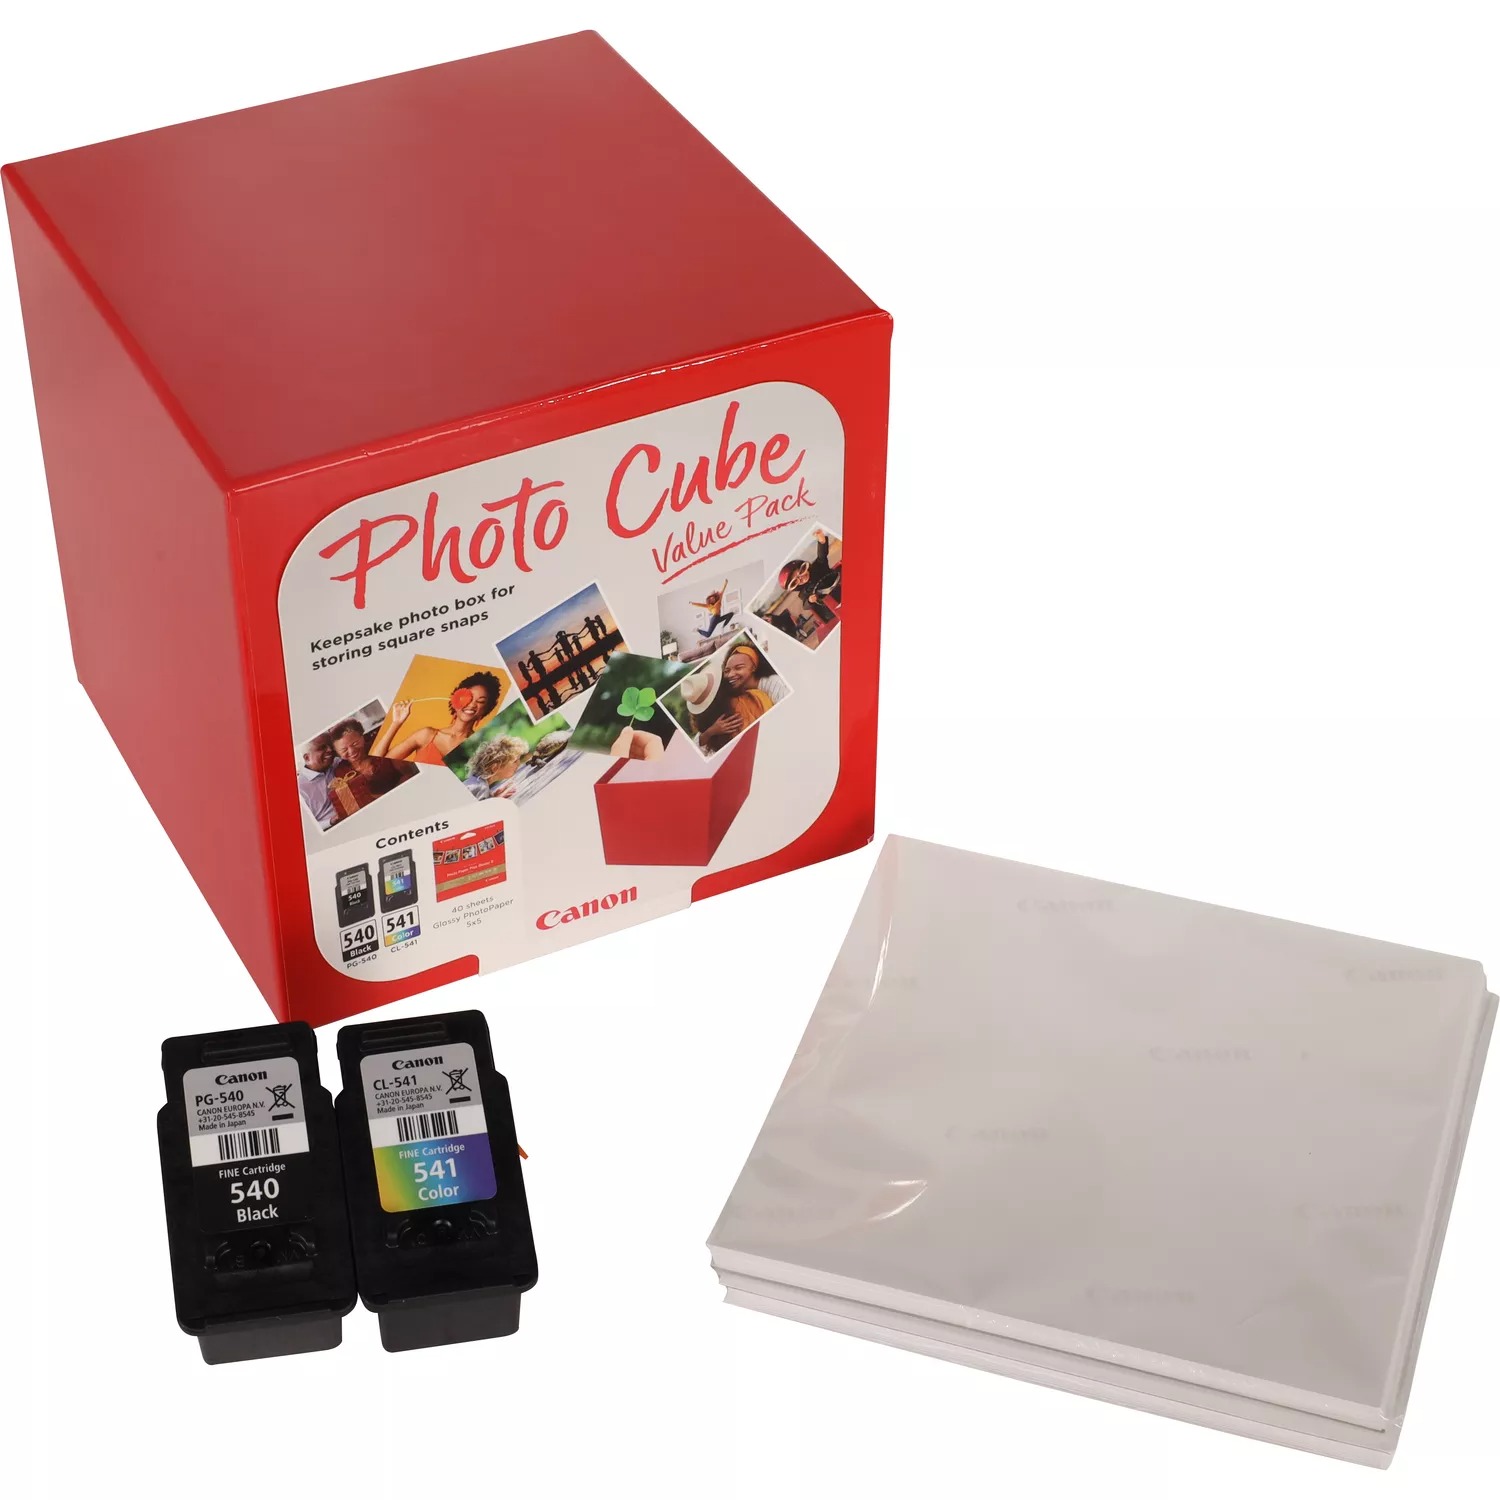 Original Canon Pg-540/Cl-541 Photo Cube Value Pack (5225B012)